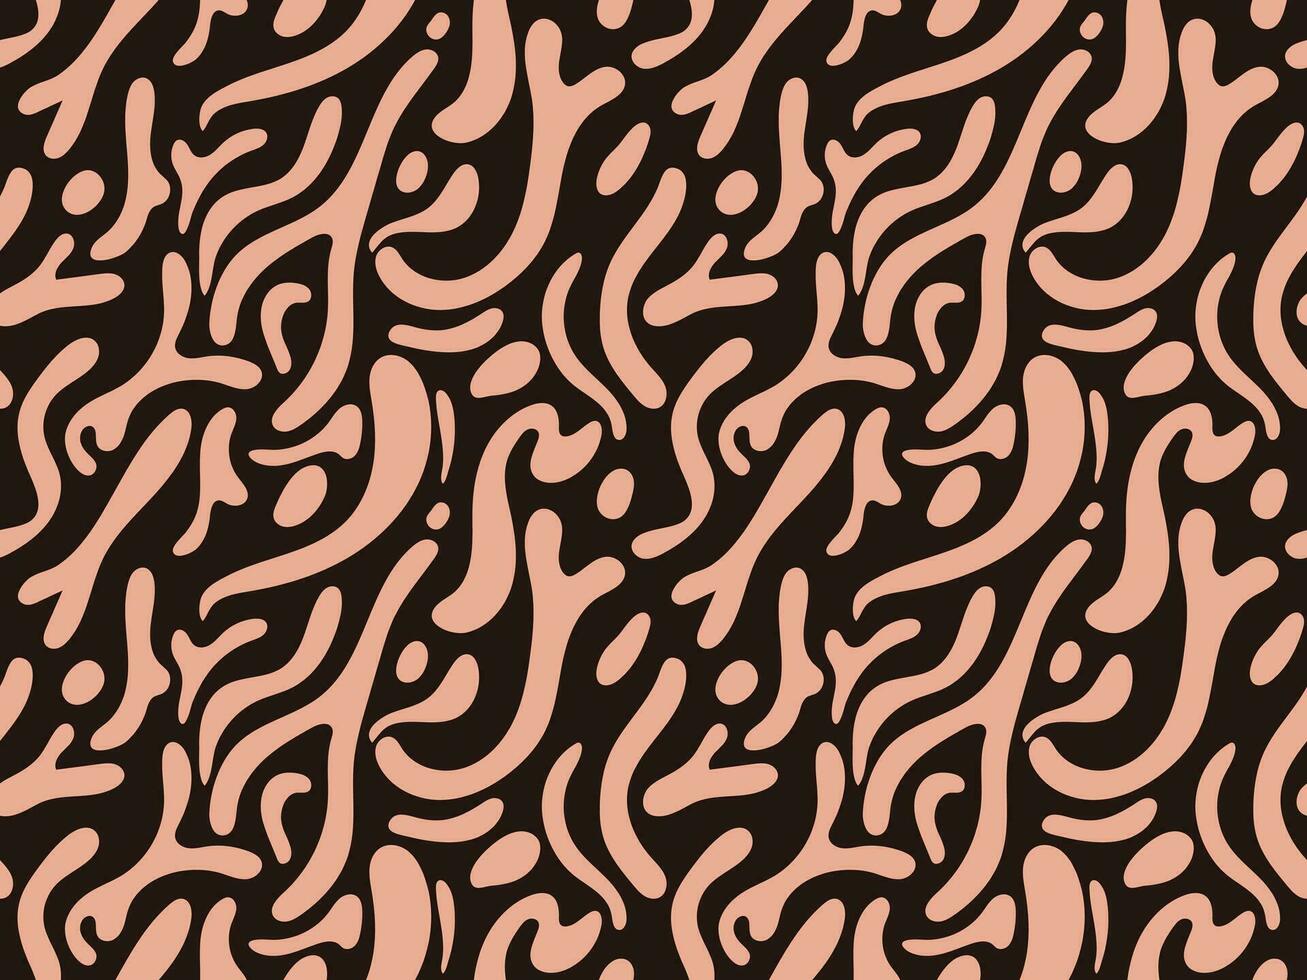 Hand drawn minimal seamless abstract organic shapes pattern contemporary print vector